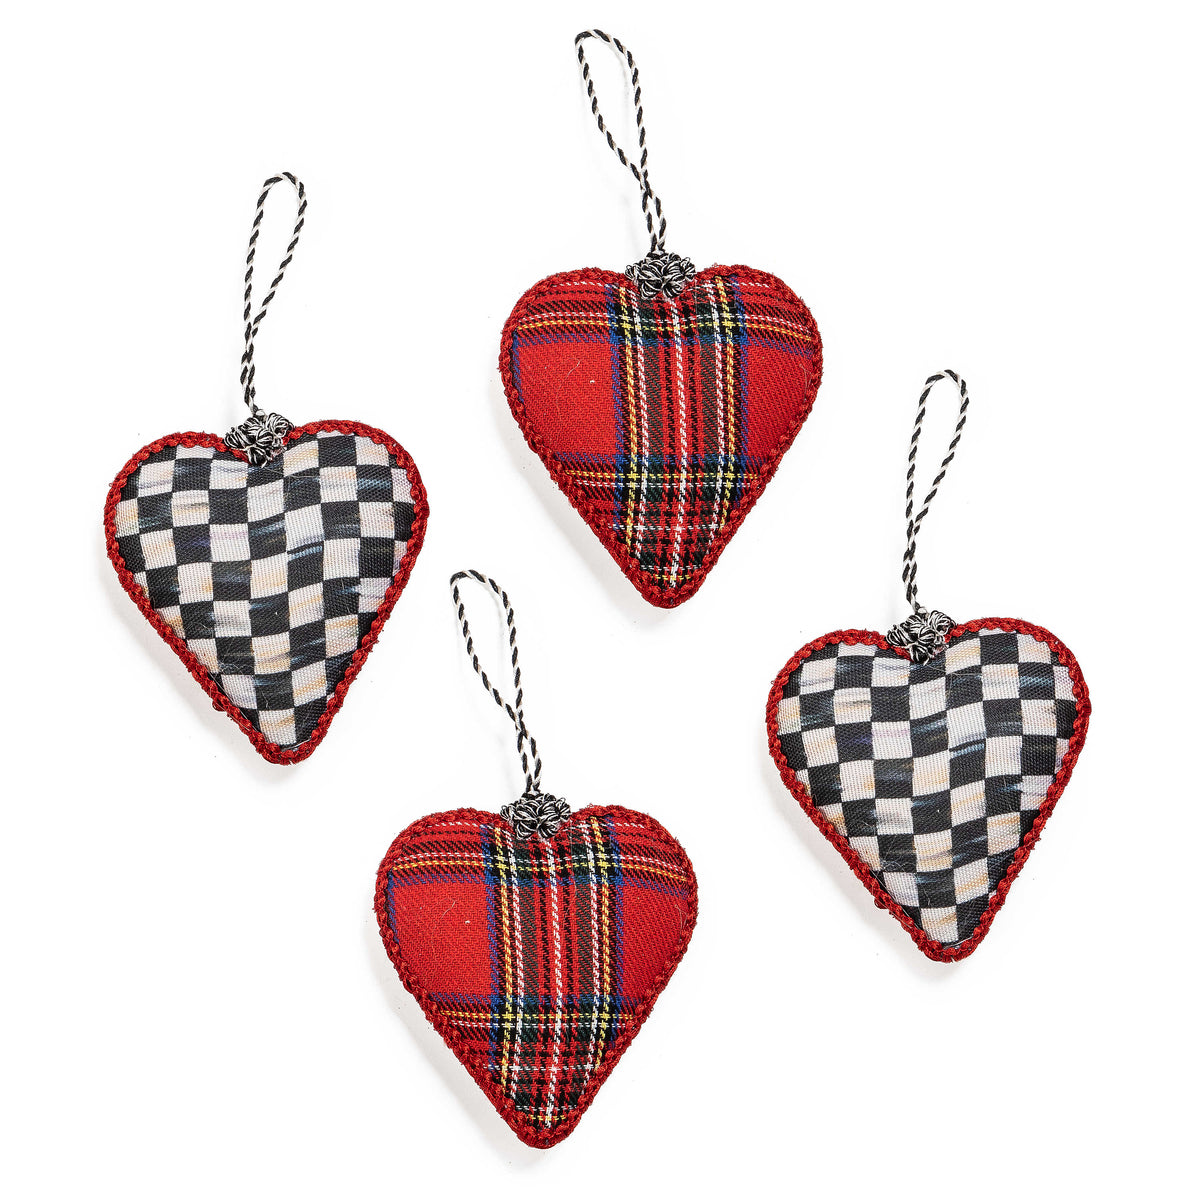 Tartastic Heart Ornaments - Set of 4